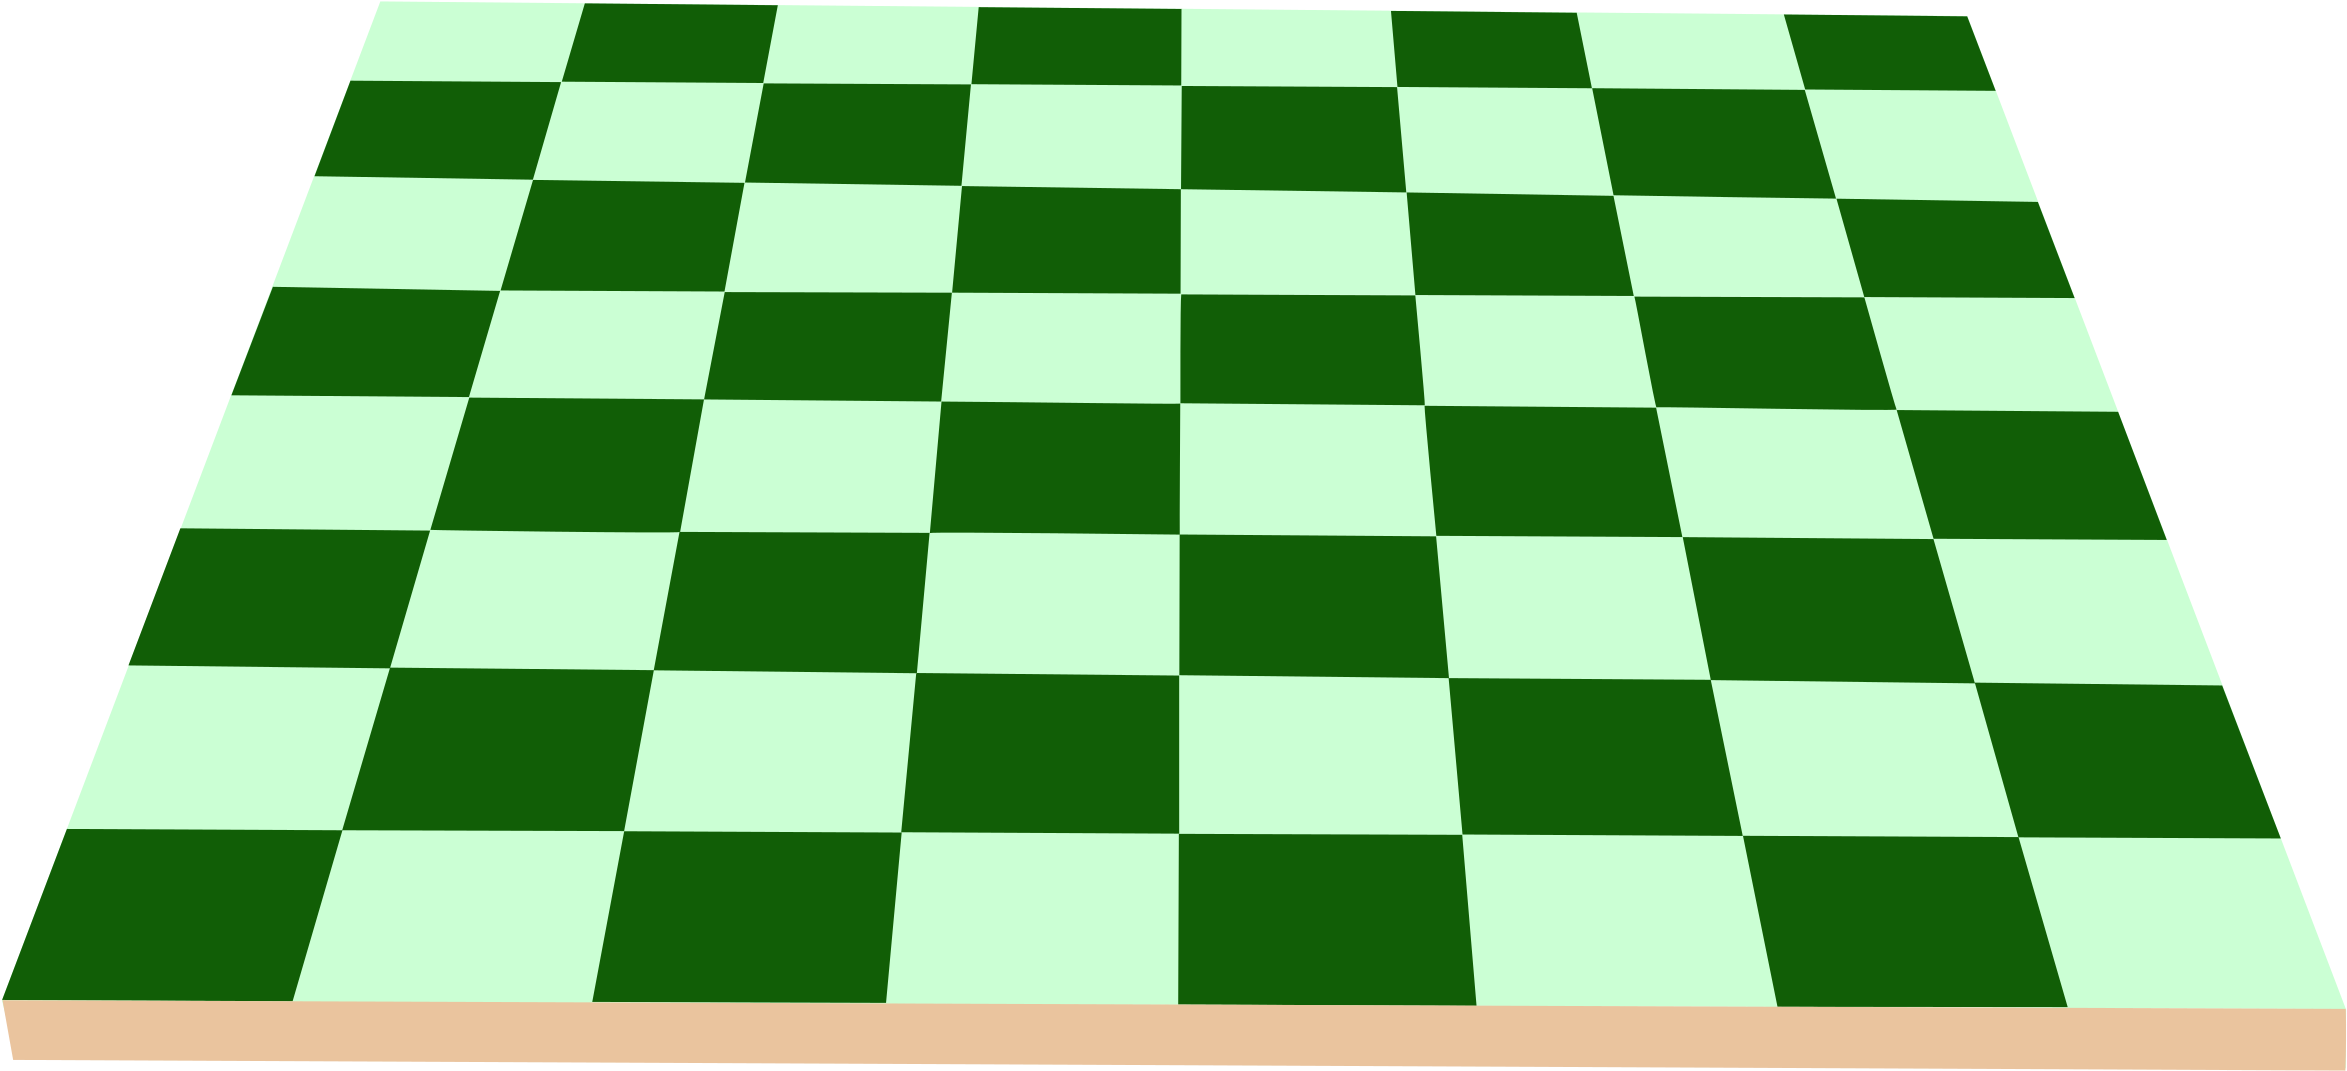 Big Image - Chess Board Png (2400x1200)